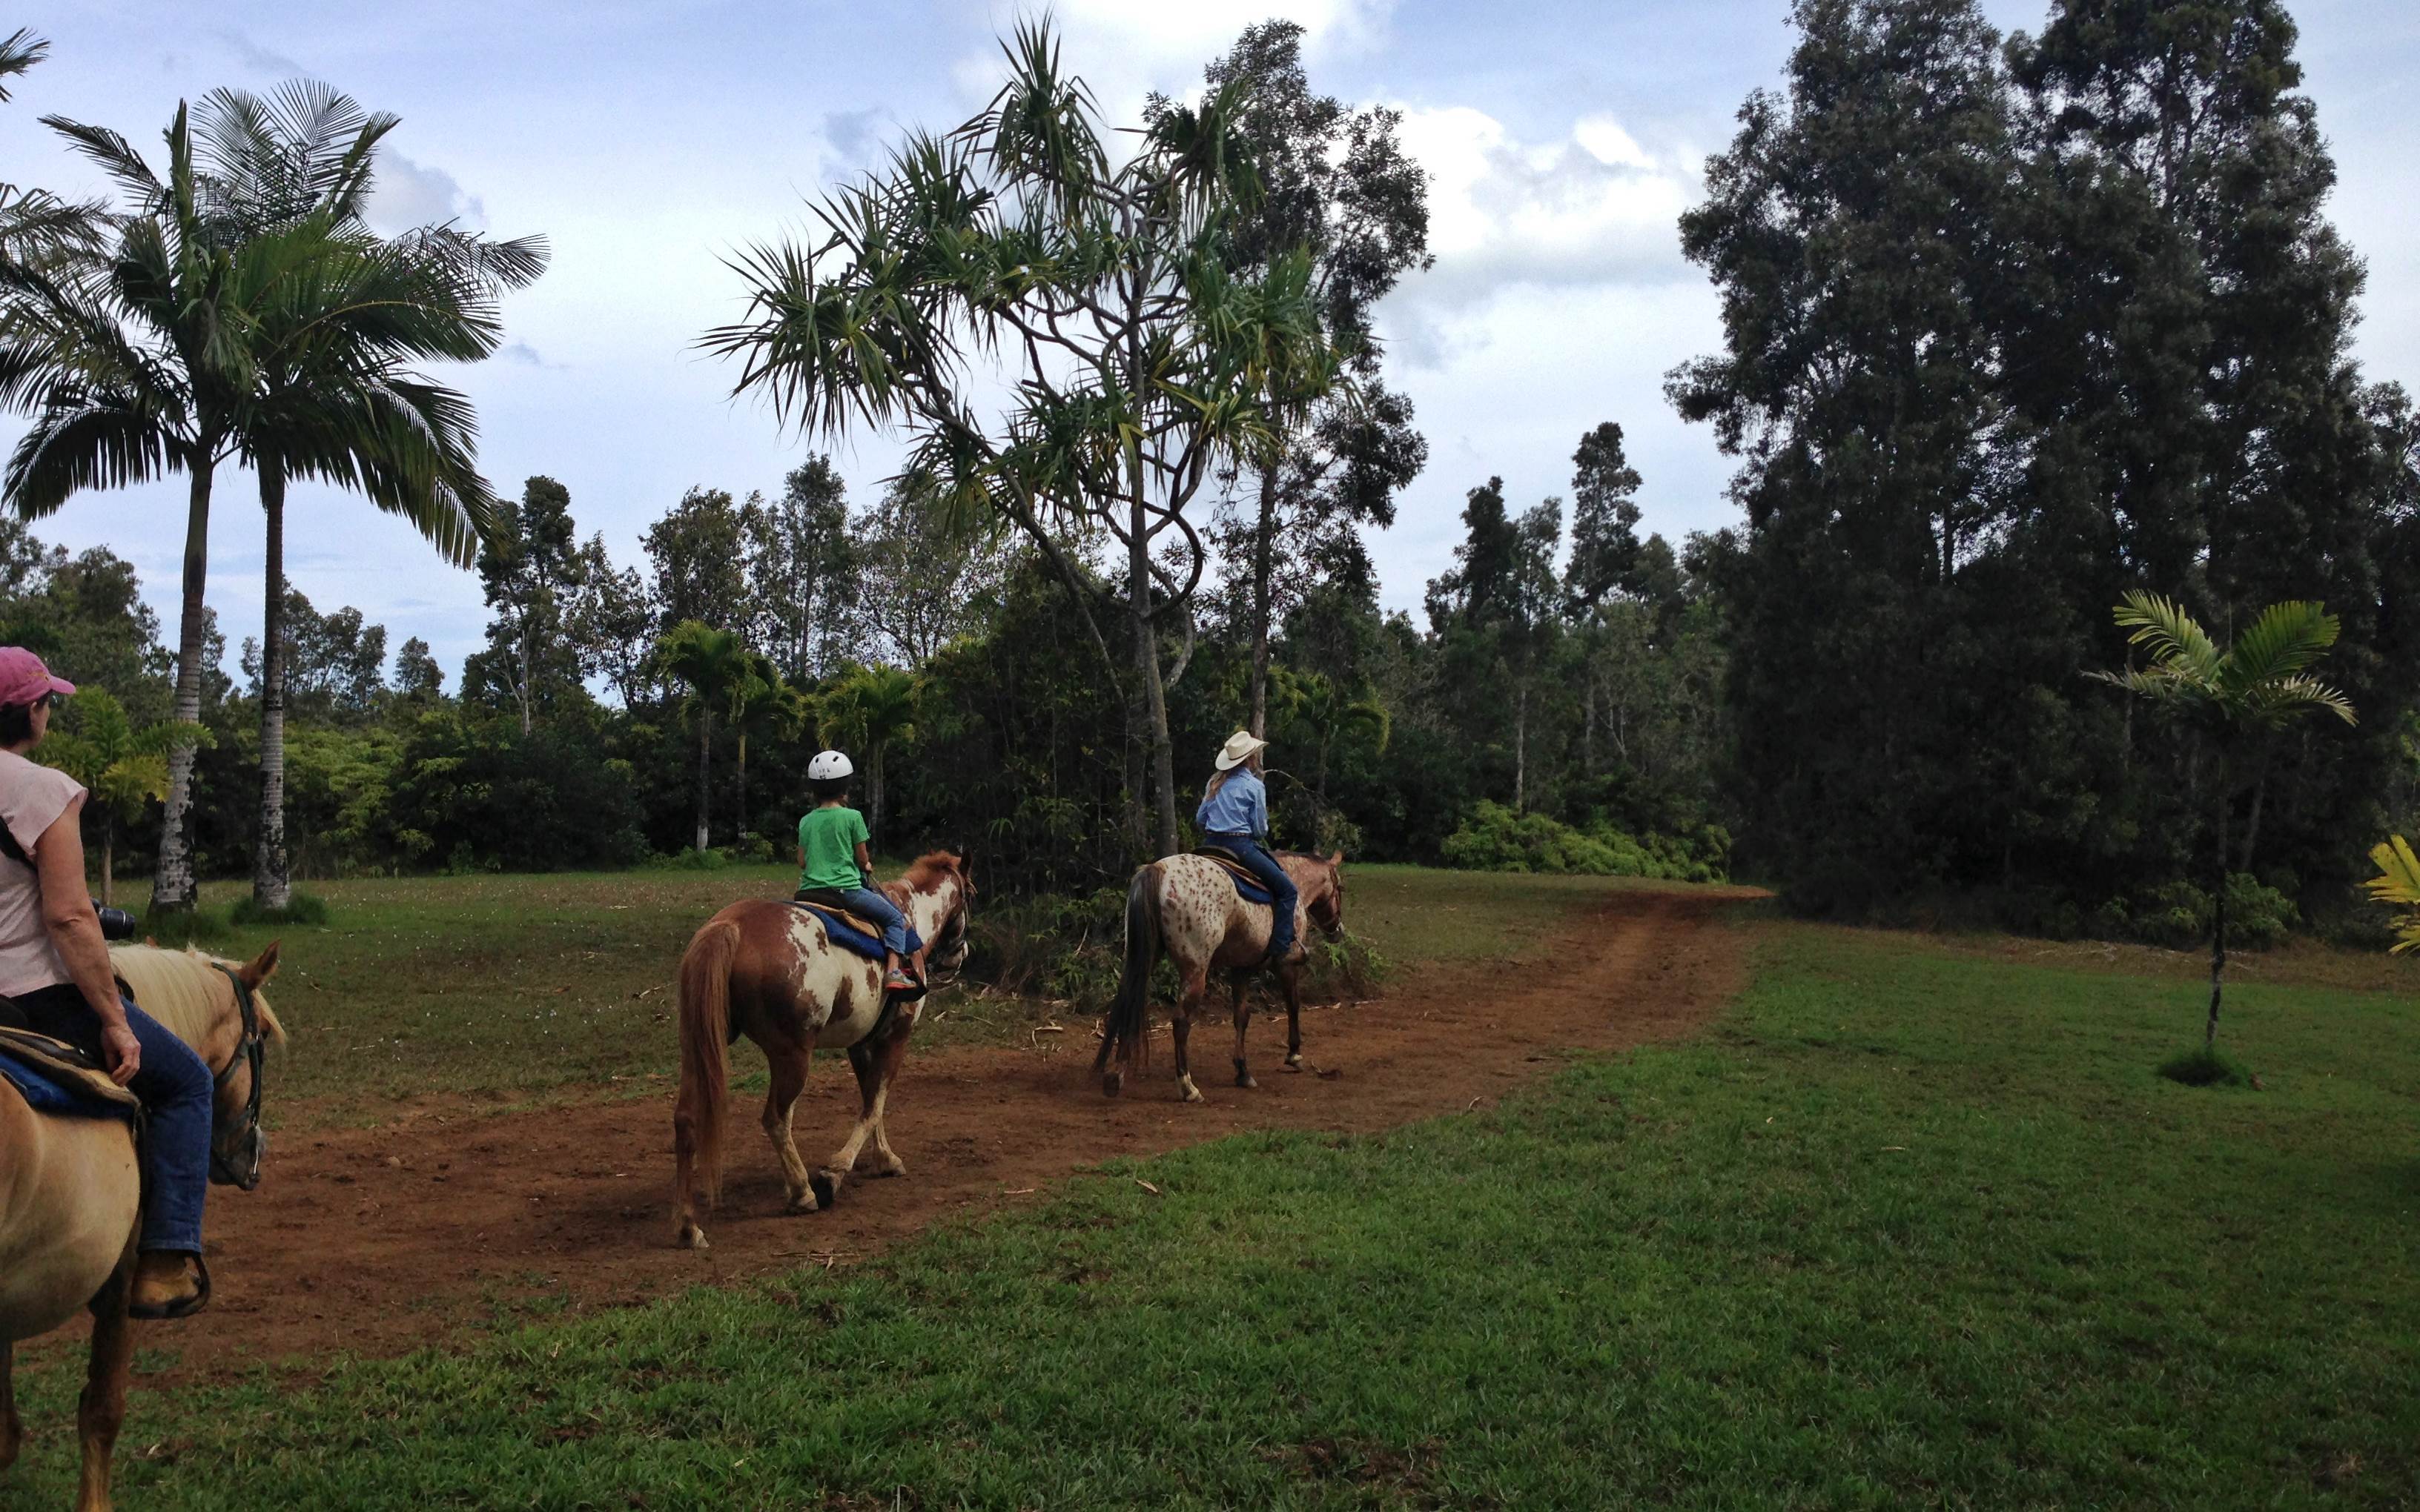 Kauai horseback riding island exploring adventure horse thing family if just